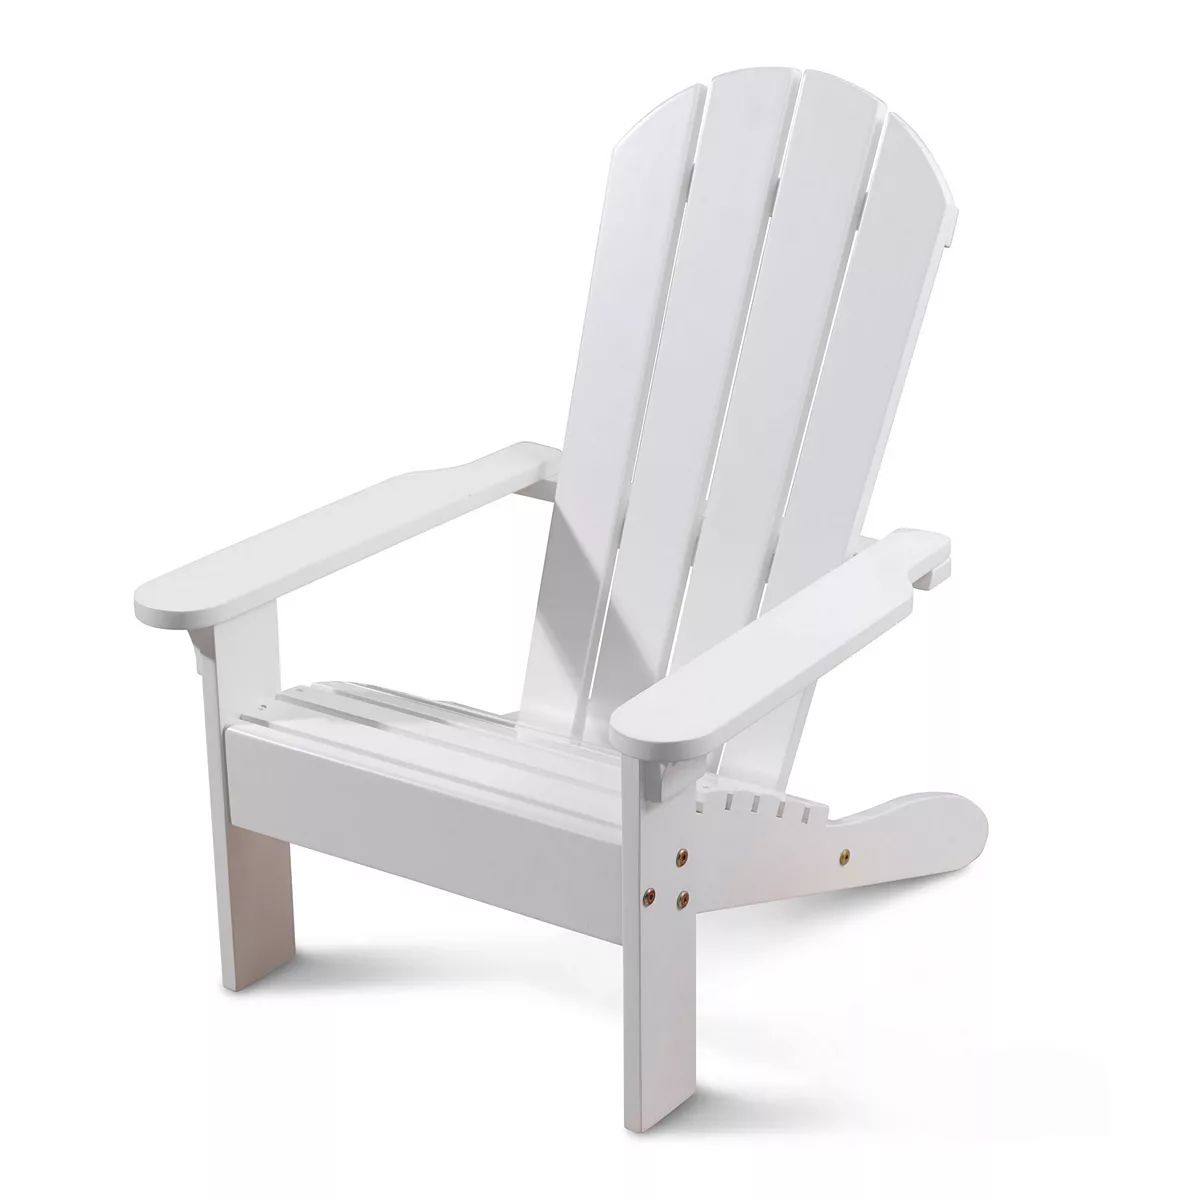 KidKraft Adirondack Chair | Kohl's